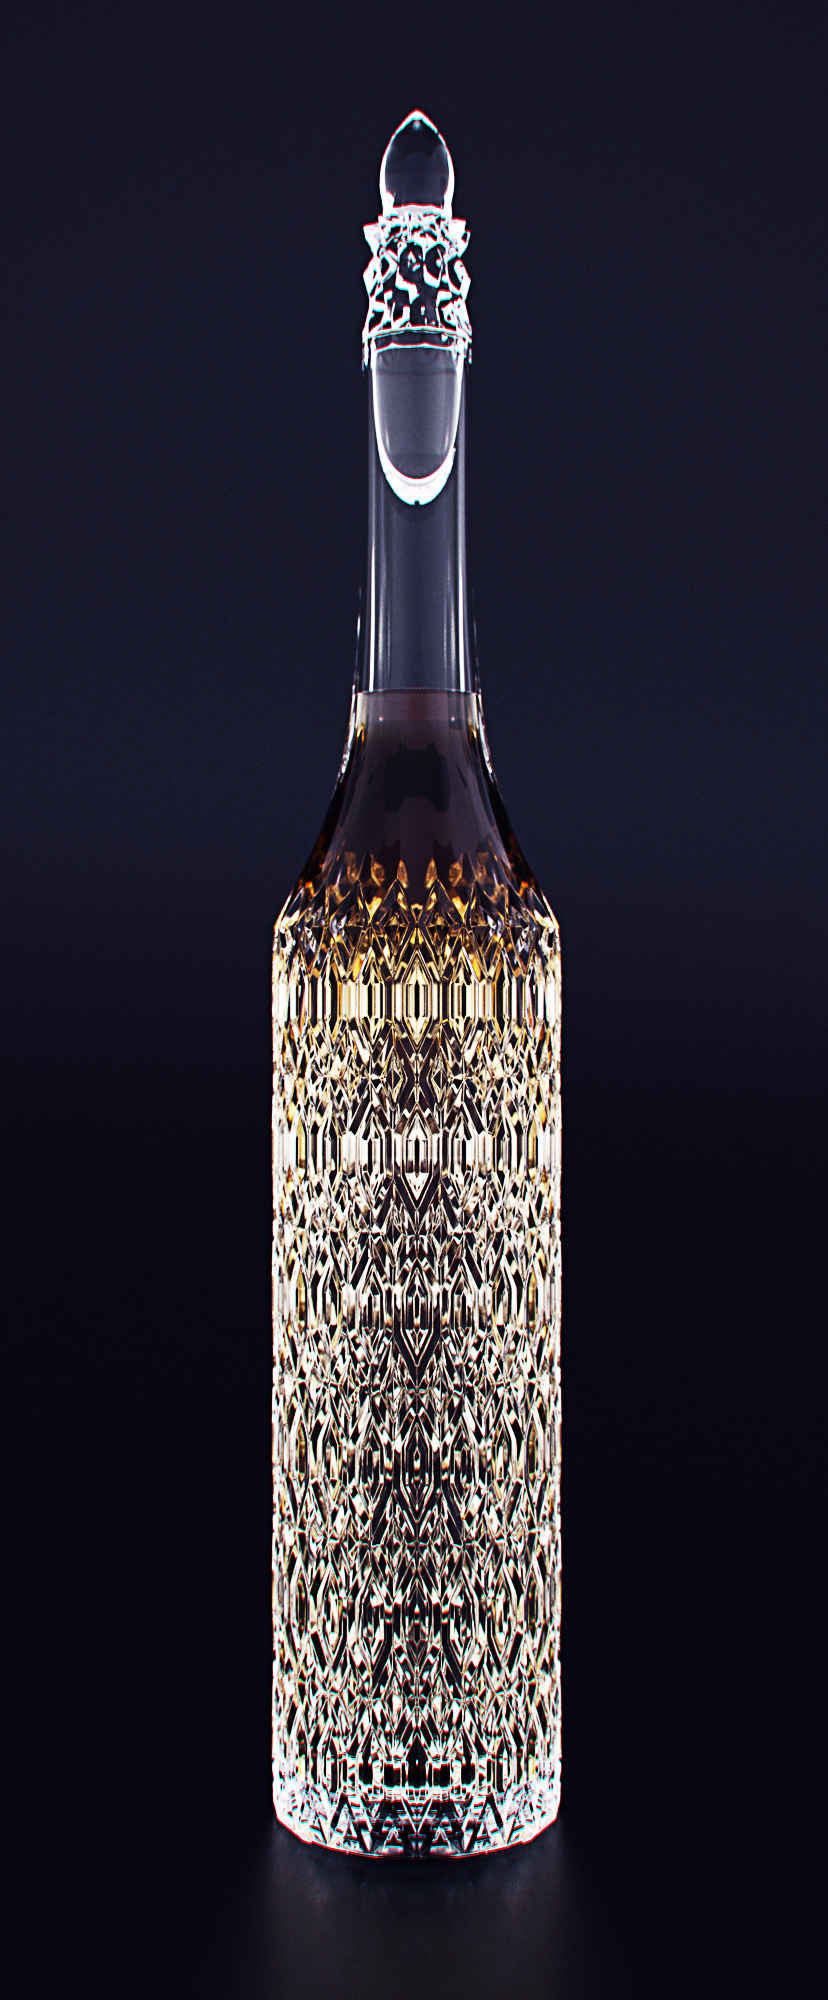 ivan venkov cognac bottle exquisite bottle expensive cognac gothic gothic architecture cathedral glass Packaging